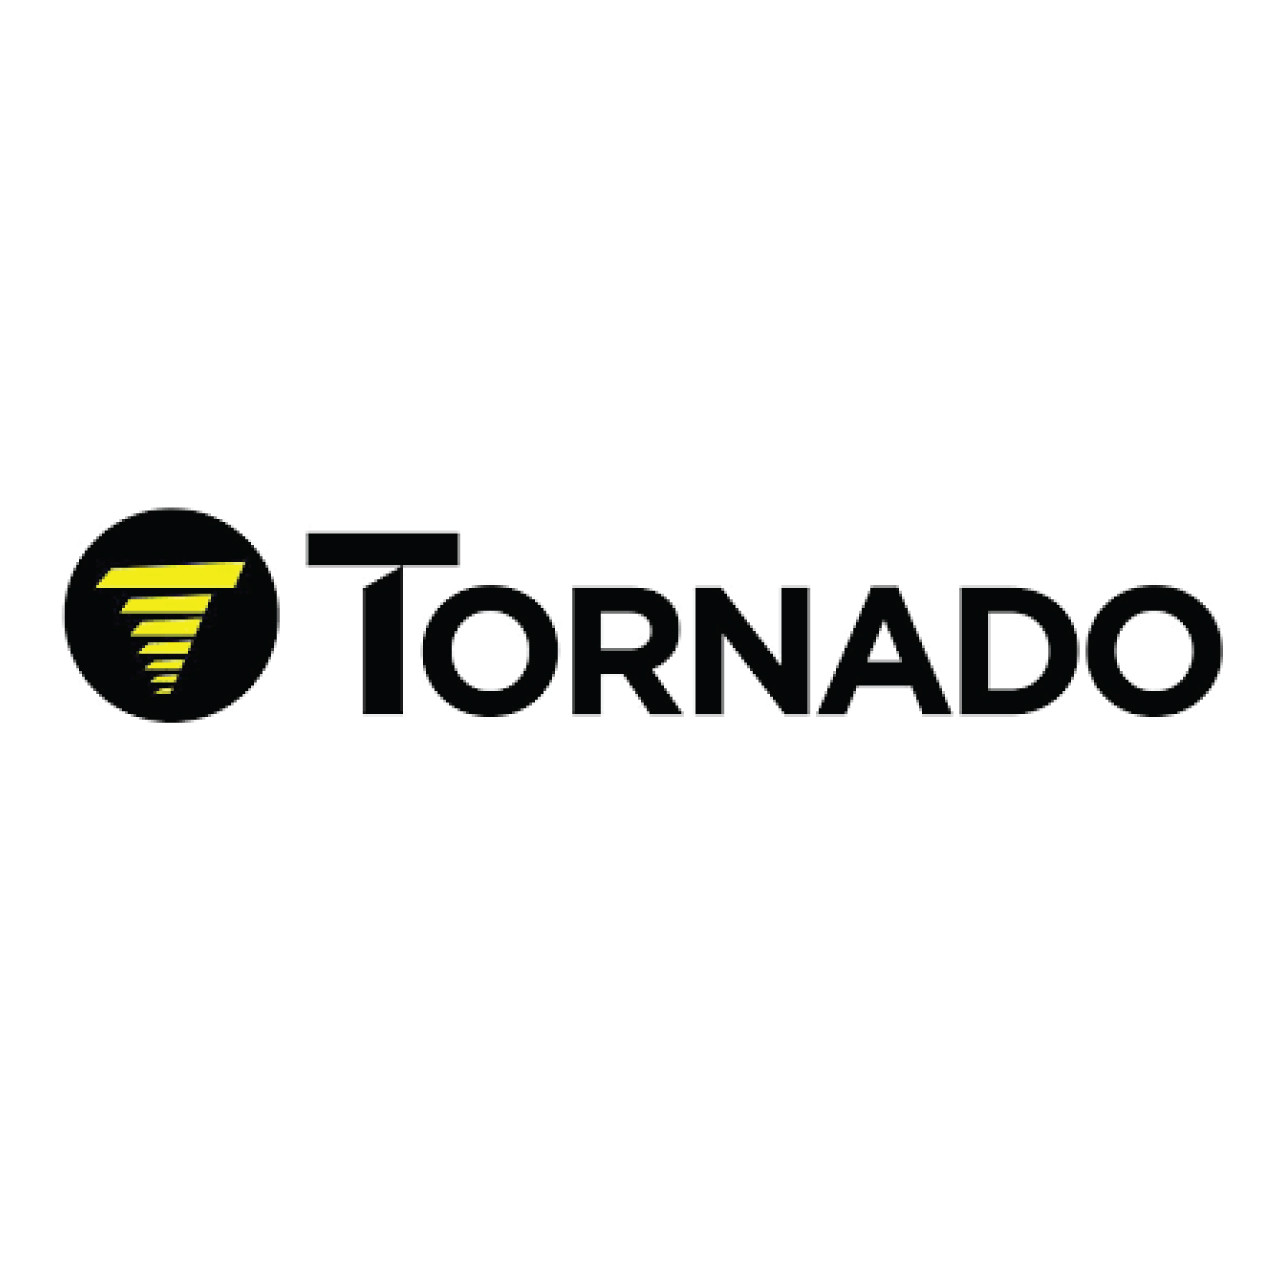 39292, Tornado 39292, Tornado BOTTOM HOUSING WALL MOUNT TASKFORCE, Tornado parts